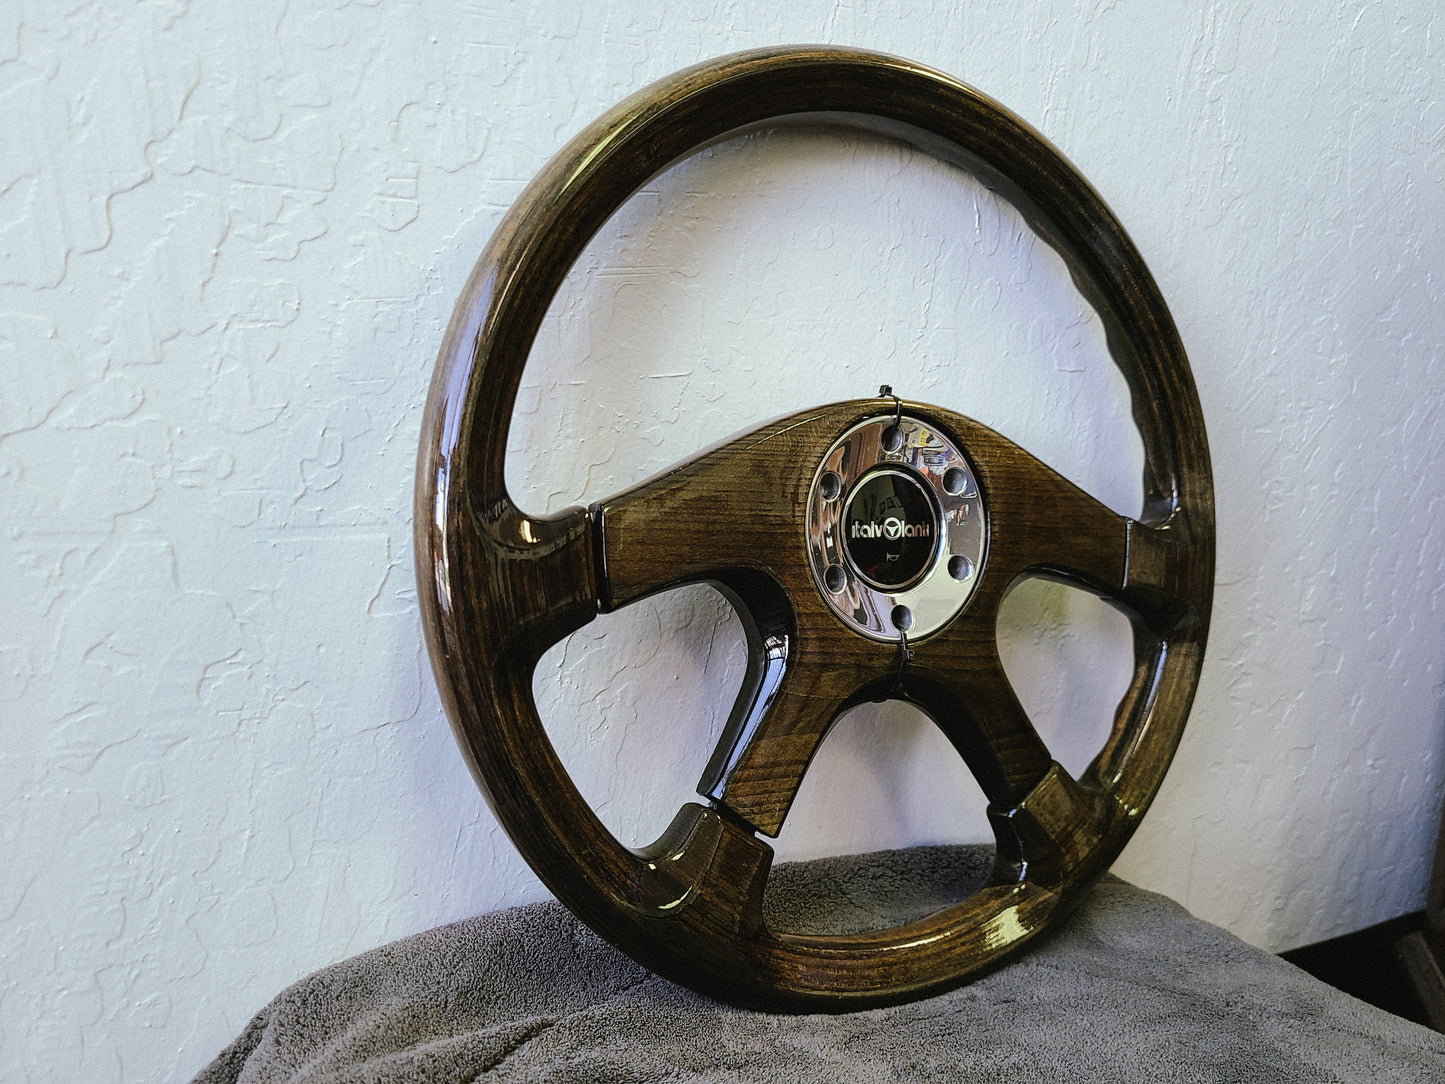 Italvolanti 4 spoke 365mm wood steering wheel